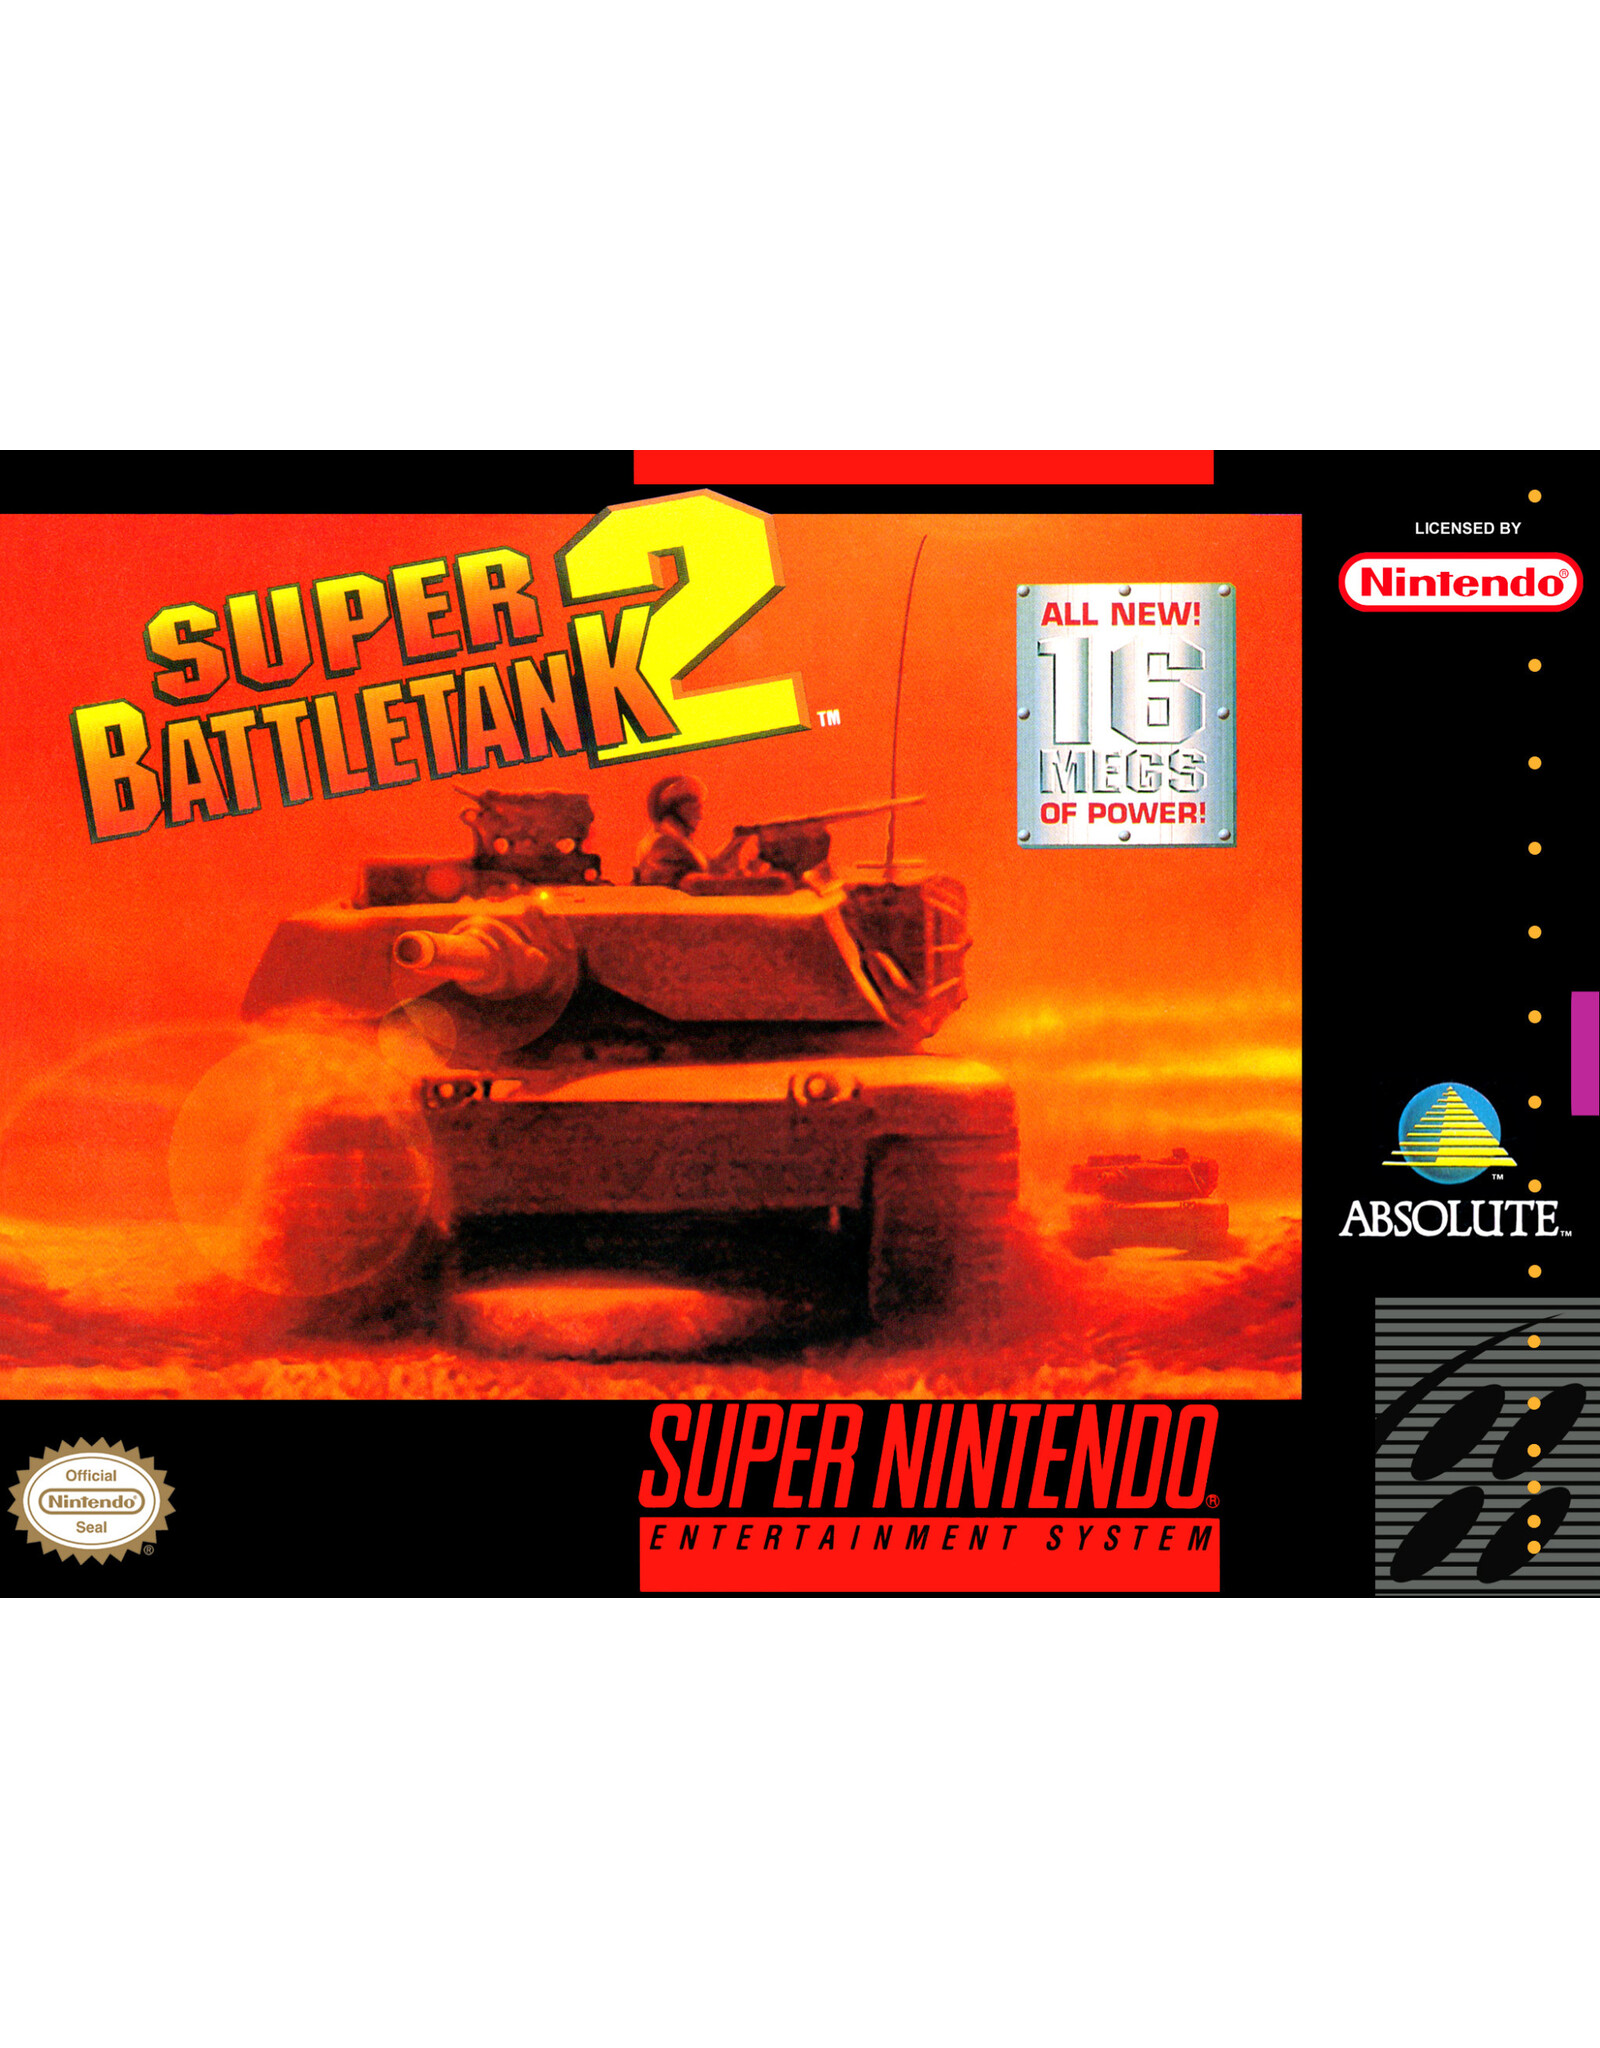 Super Nintendo Super Battletank 2 (CiB, Damaged Box and Manual, Includes Poster!)